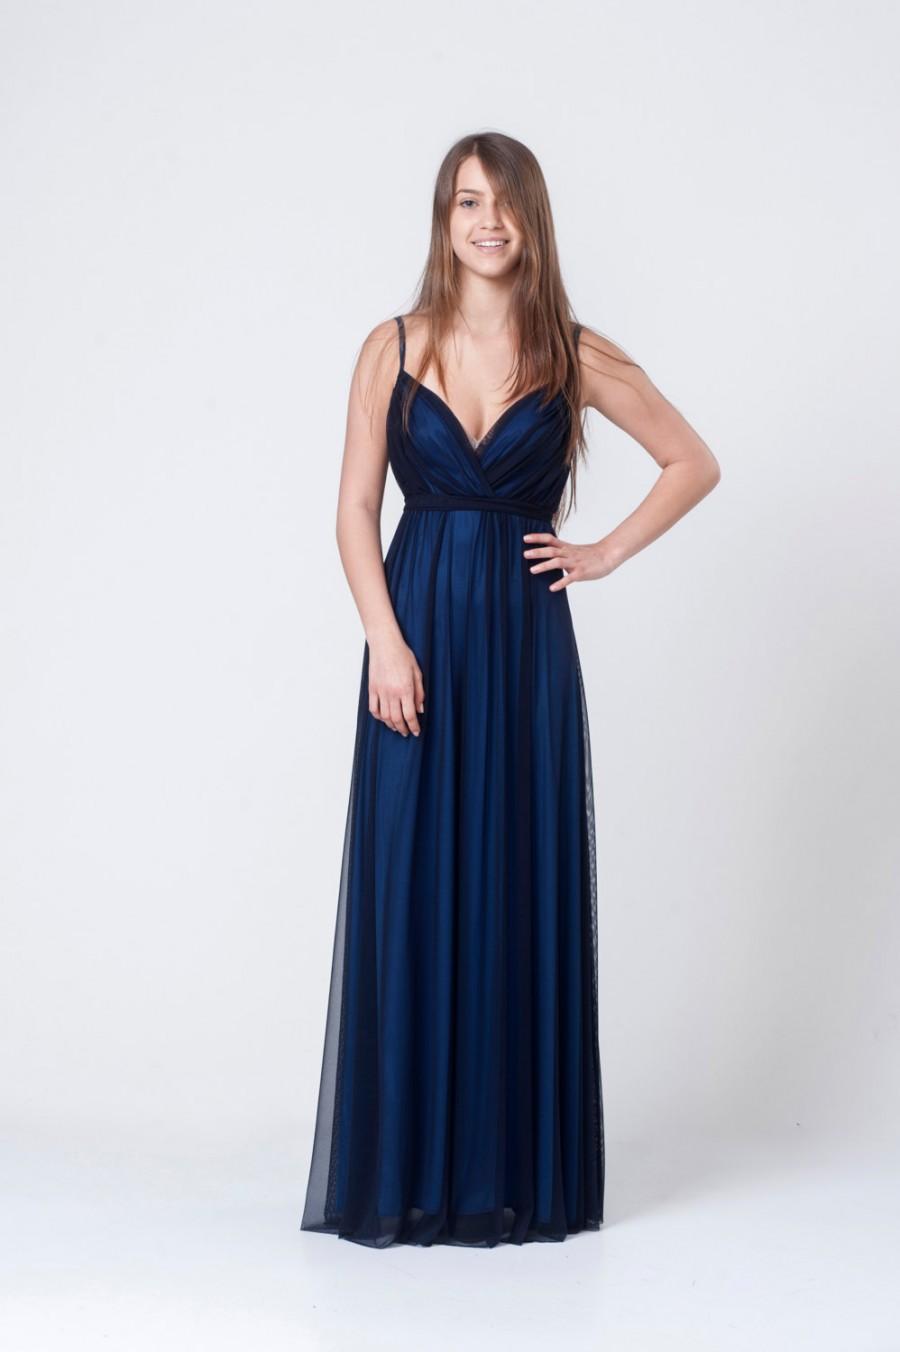 Mariage - Navy Blue Prom Dress, A Line Dress, Plus Size Dress, Bridesmaid Dress, Long Prom Dress, Backless Prom Dress, Elegant Dress, Cocktail Dress